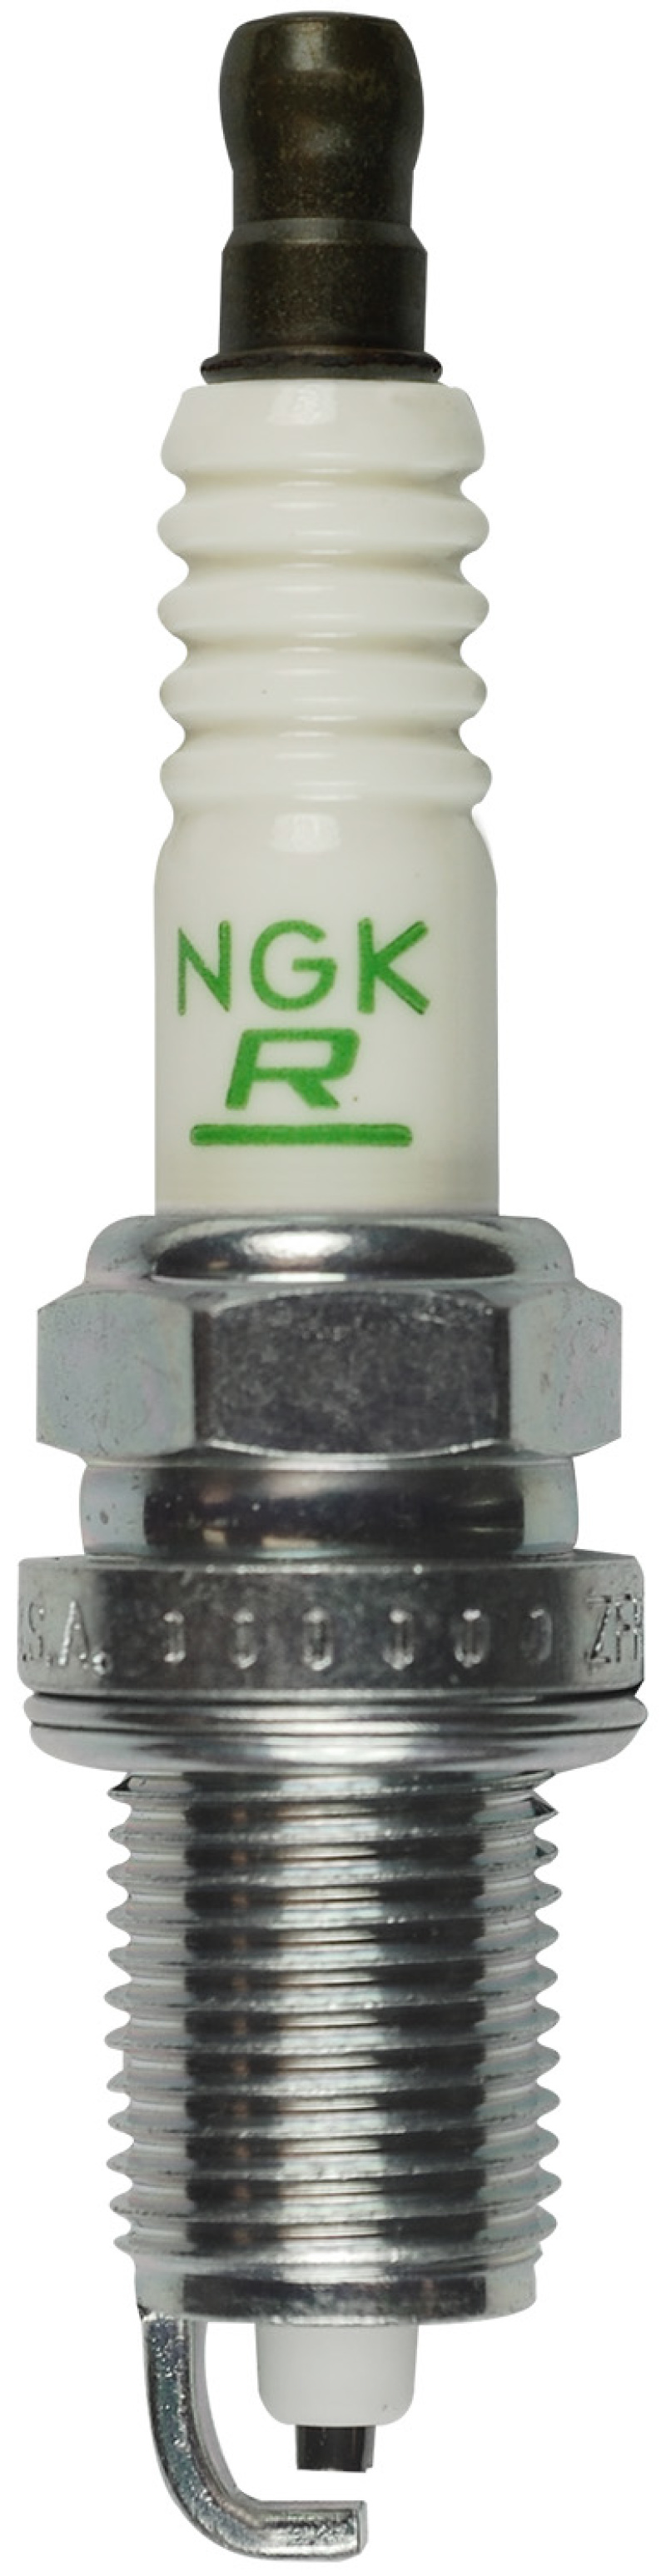 NGK V-Power Spark Plug Box of 4 (ZFR7F-11) - 6855